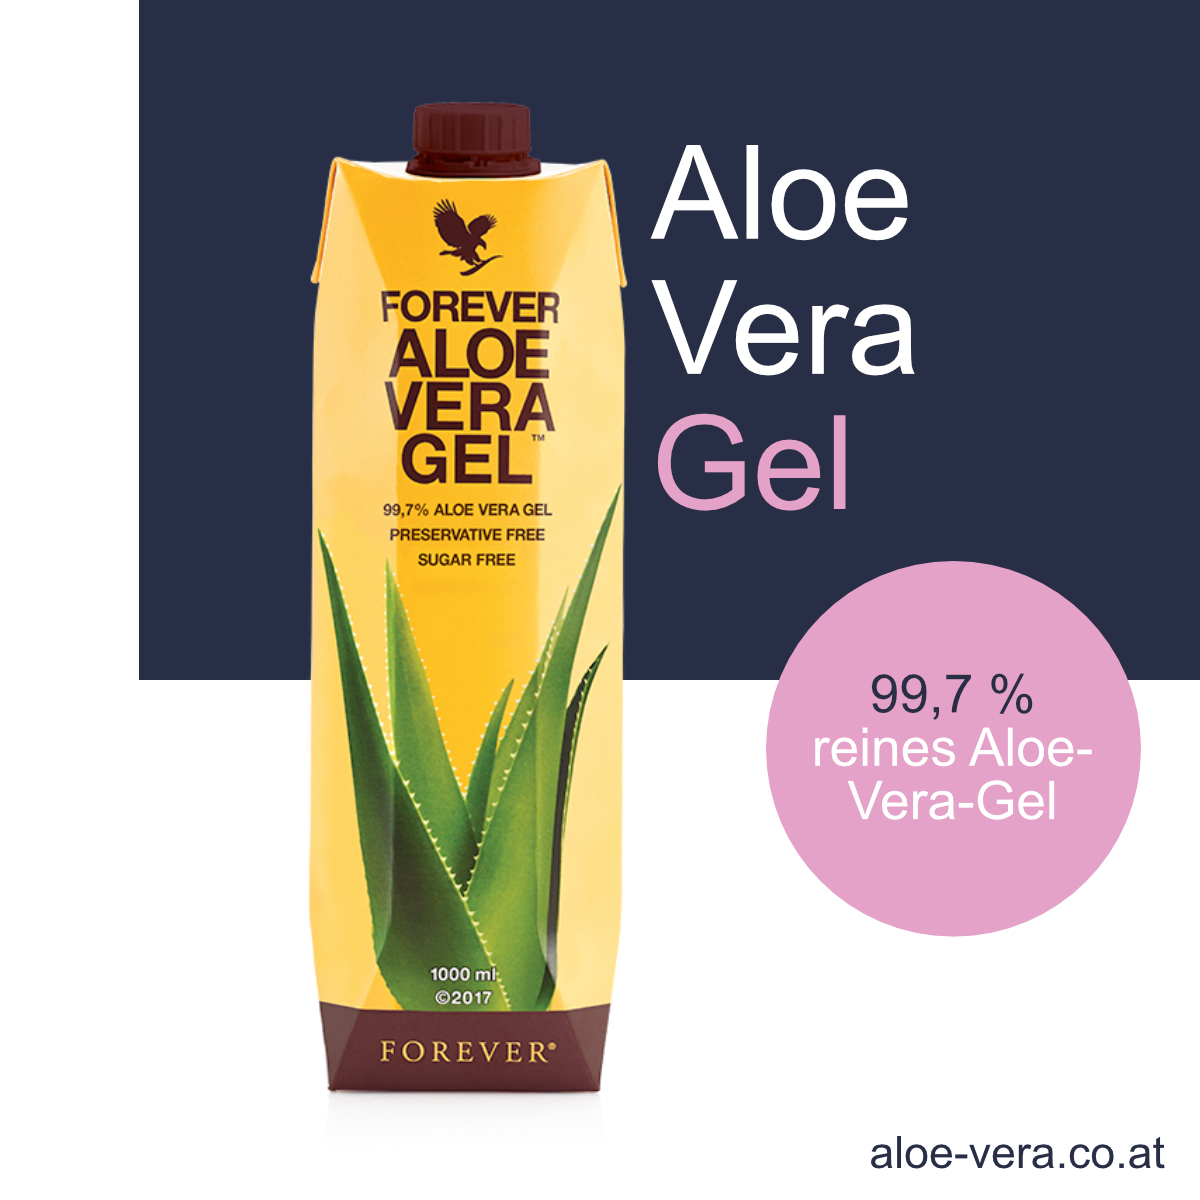 Forever Aloe Vera Gel Saft Getränk Immunsystem kaufen